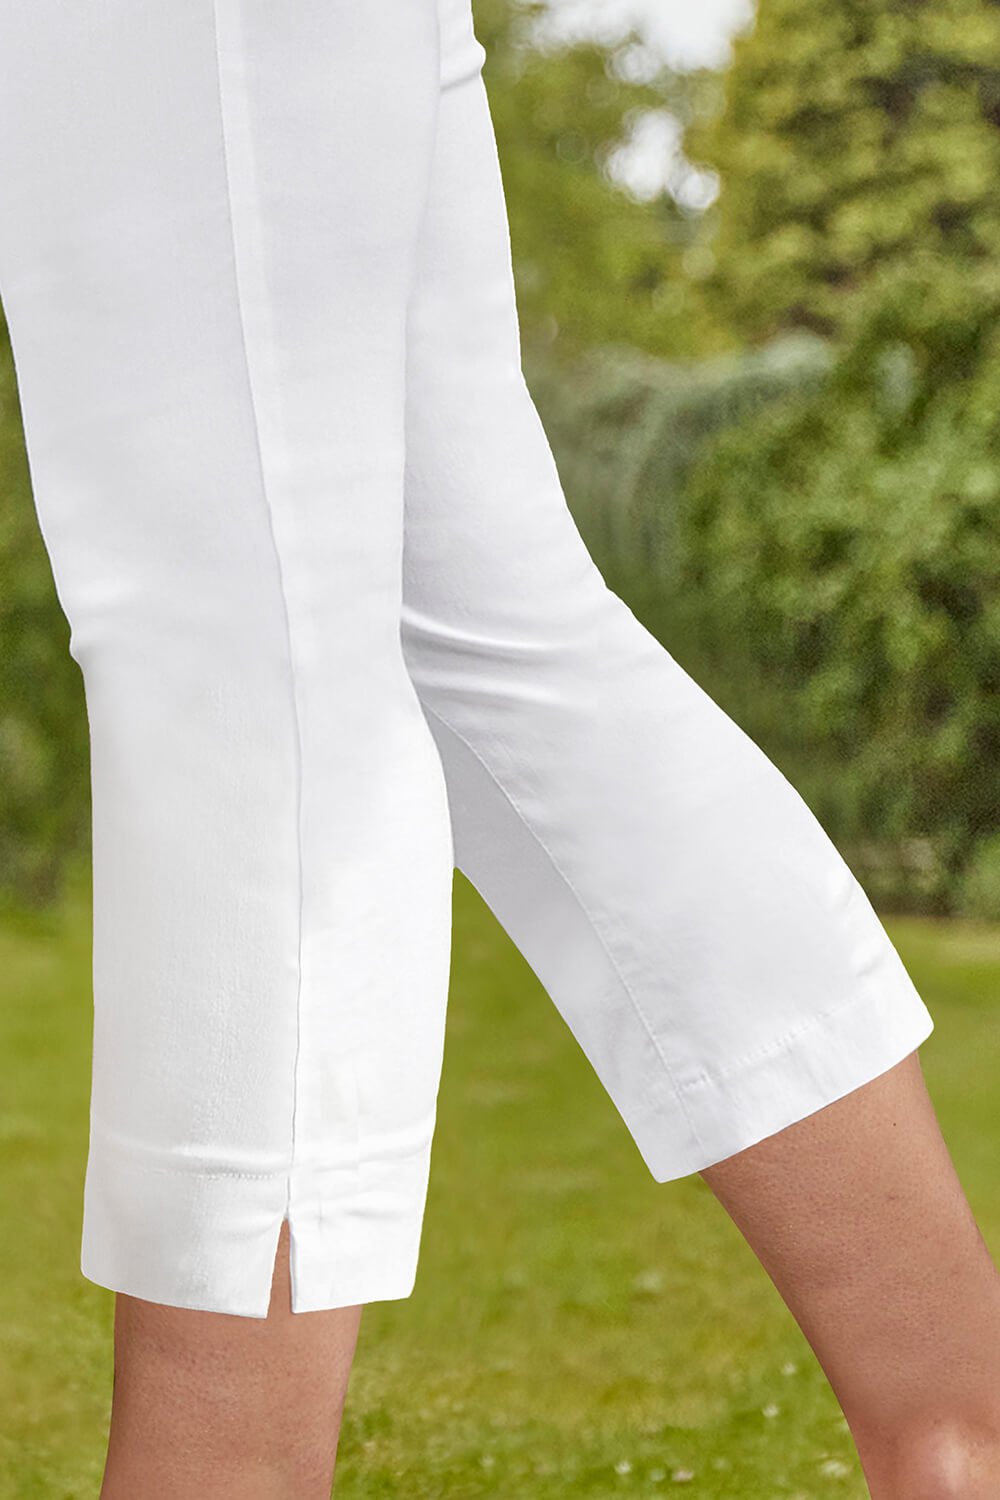 Cropped Stretch Trouser in White - Roman Originals UK